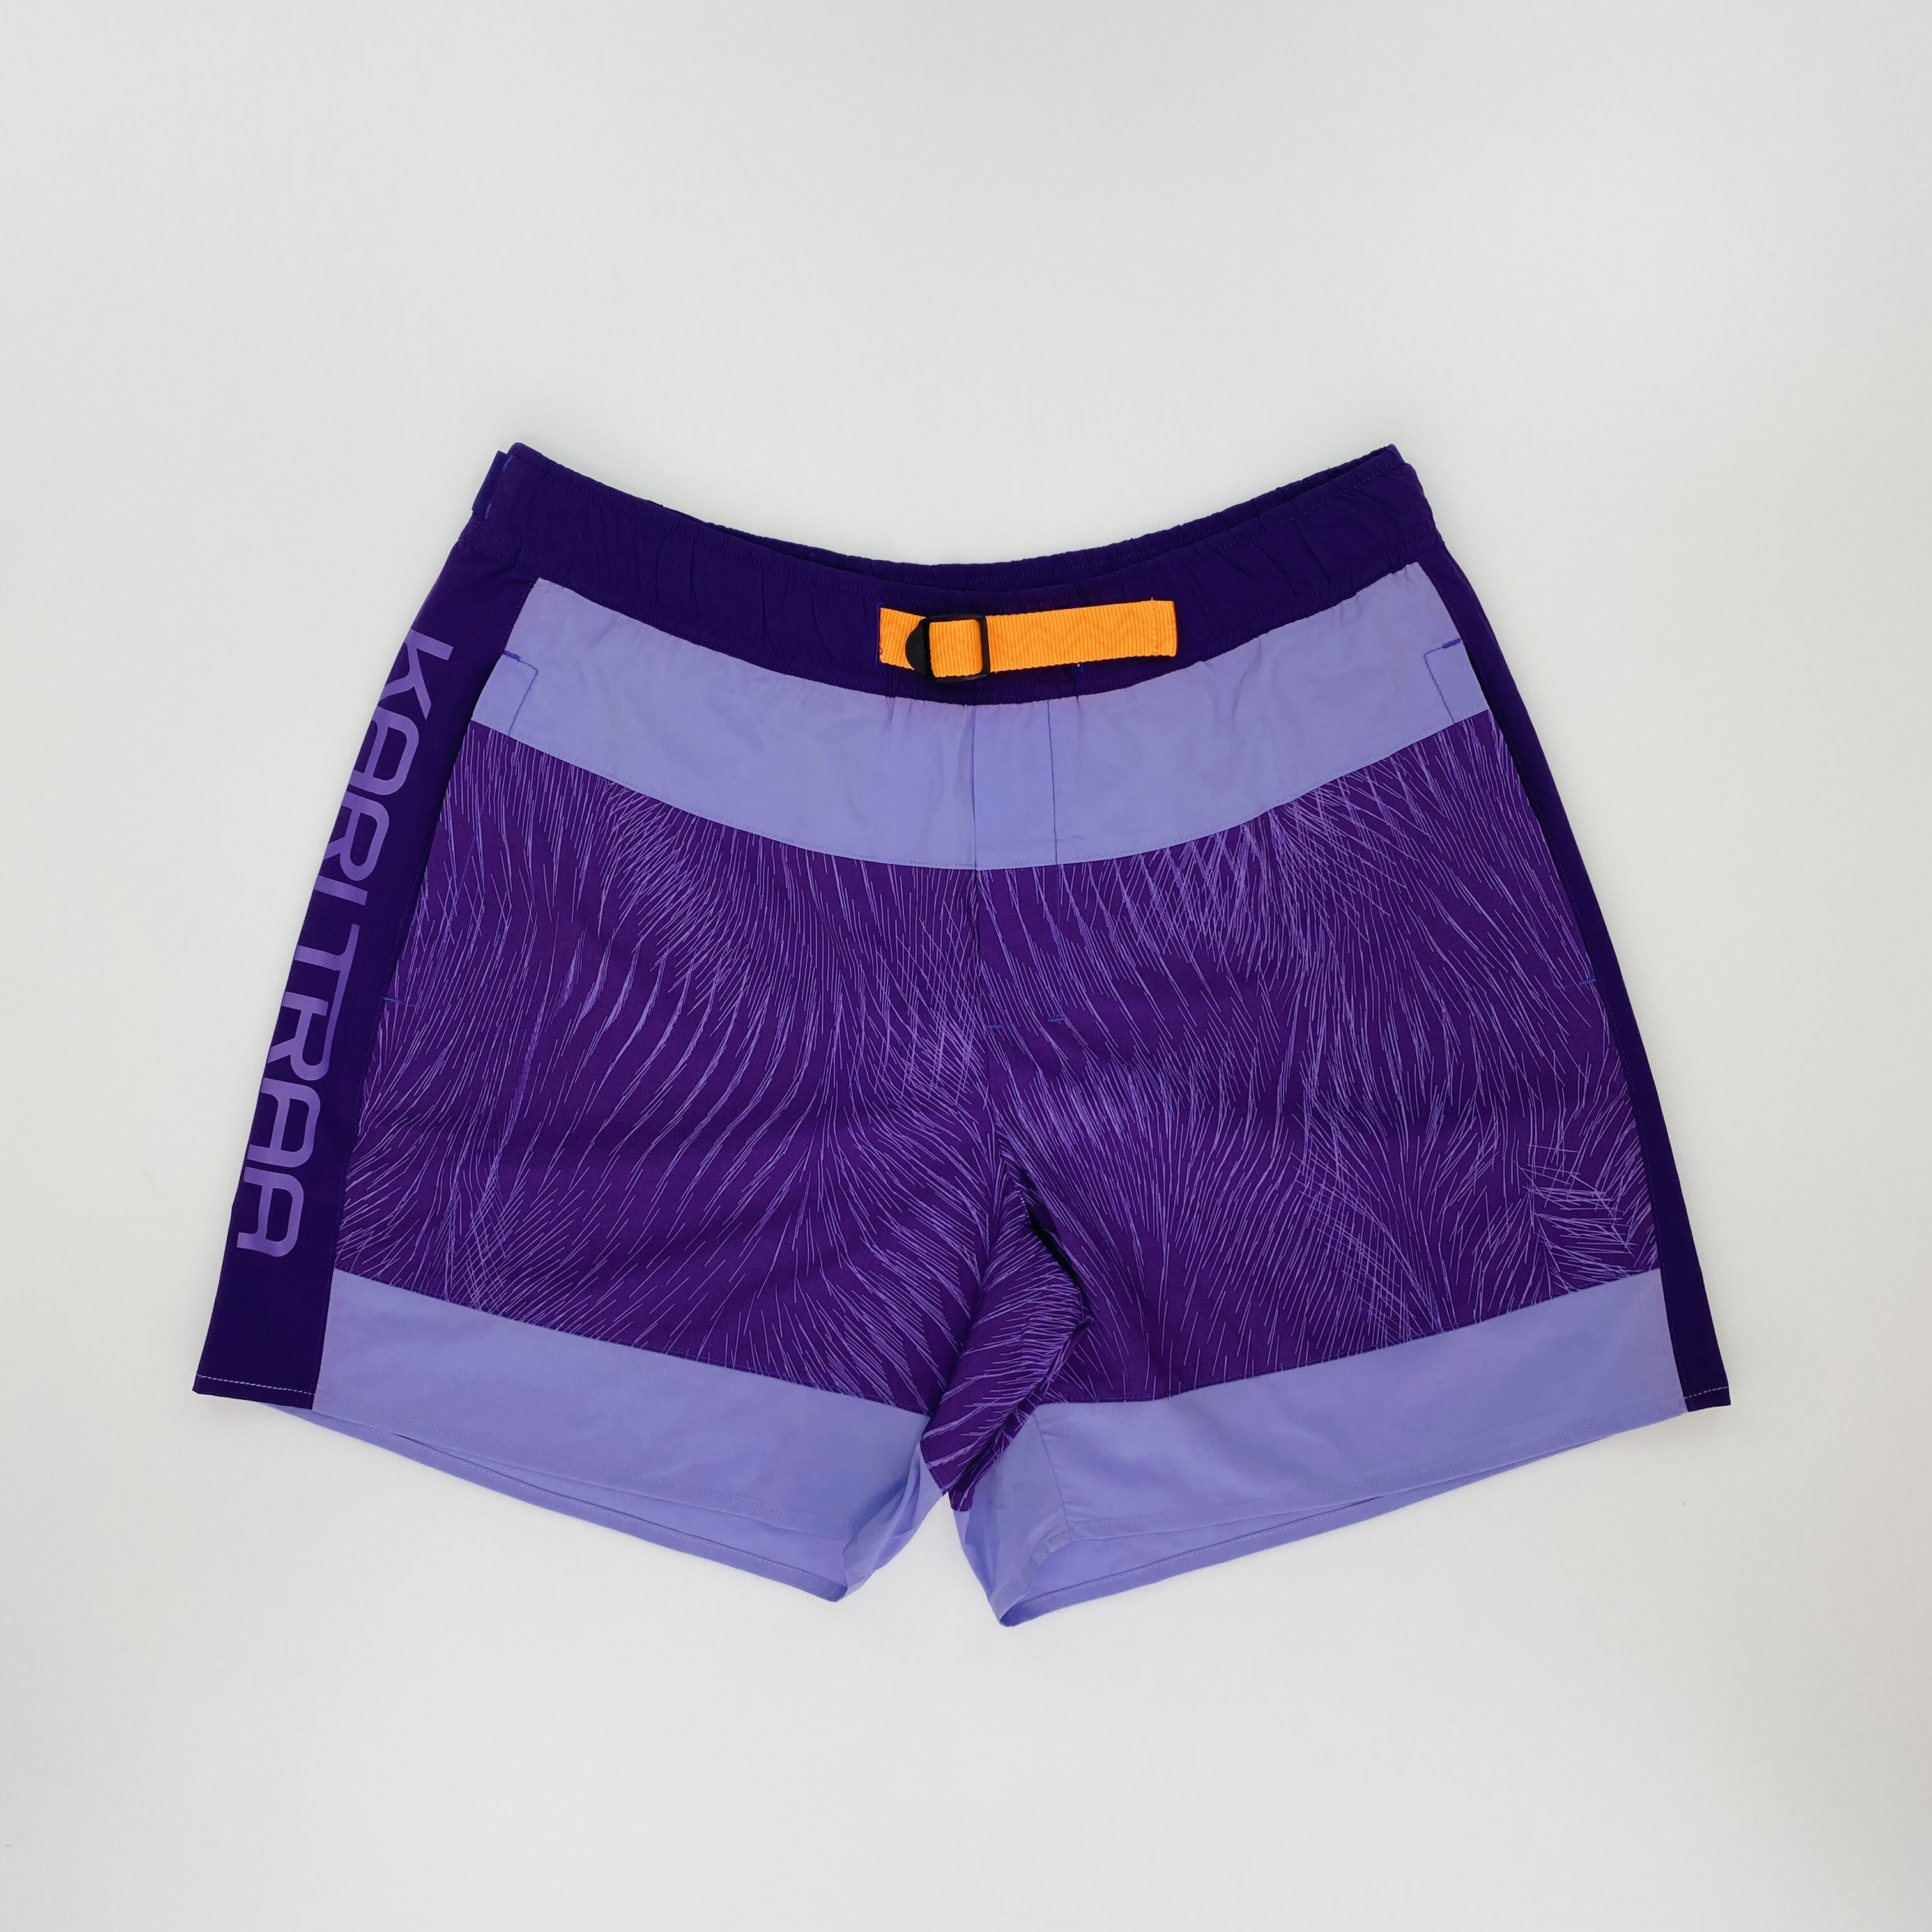 Kari Traa Ane Shorts - Segunda Mano Pantalones cortos - Mujer - Violeta - M | Hardloop